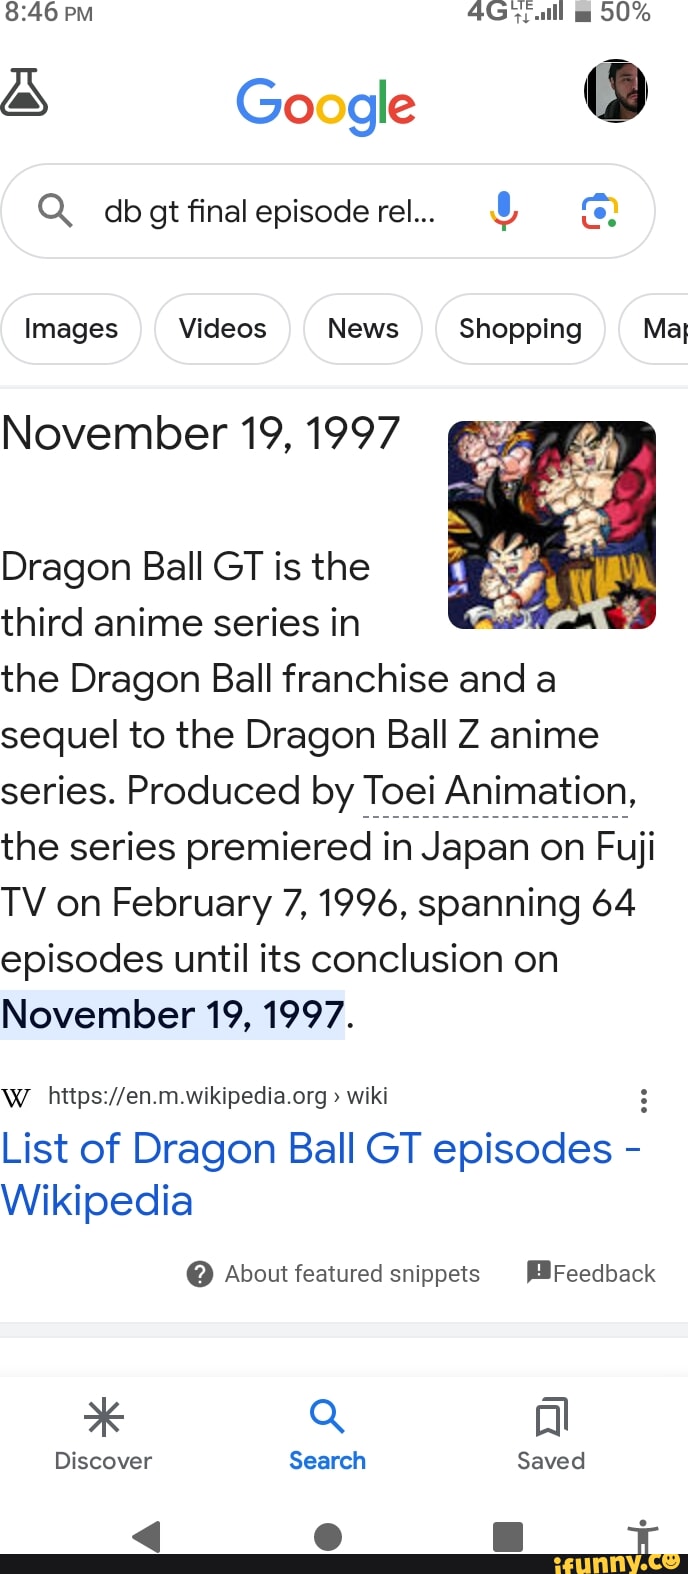 Dragon Ball GT - Wikipedia